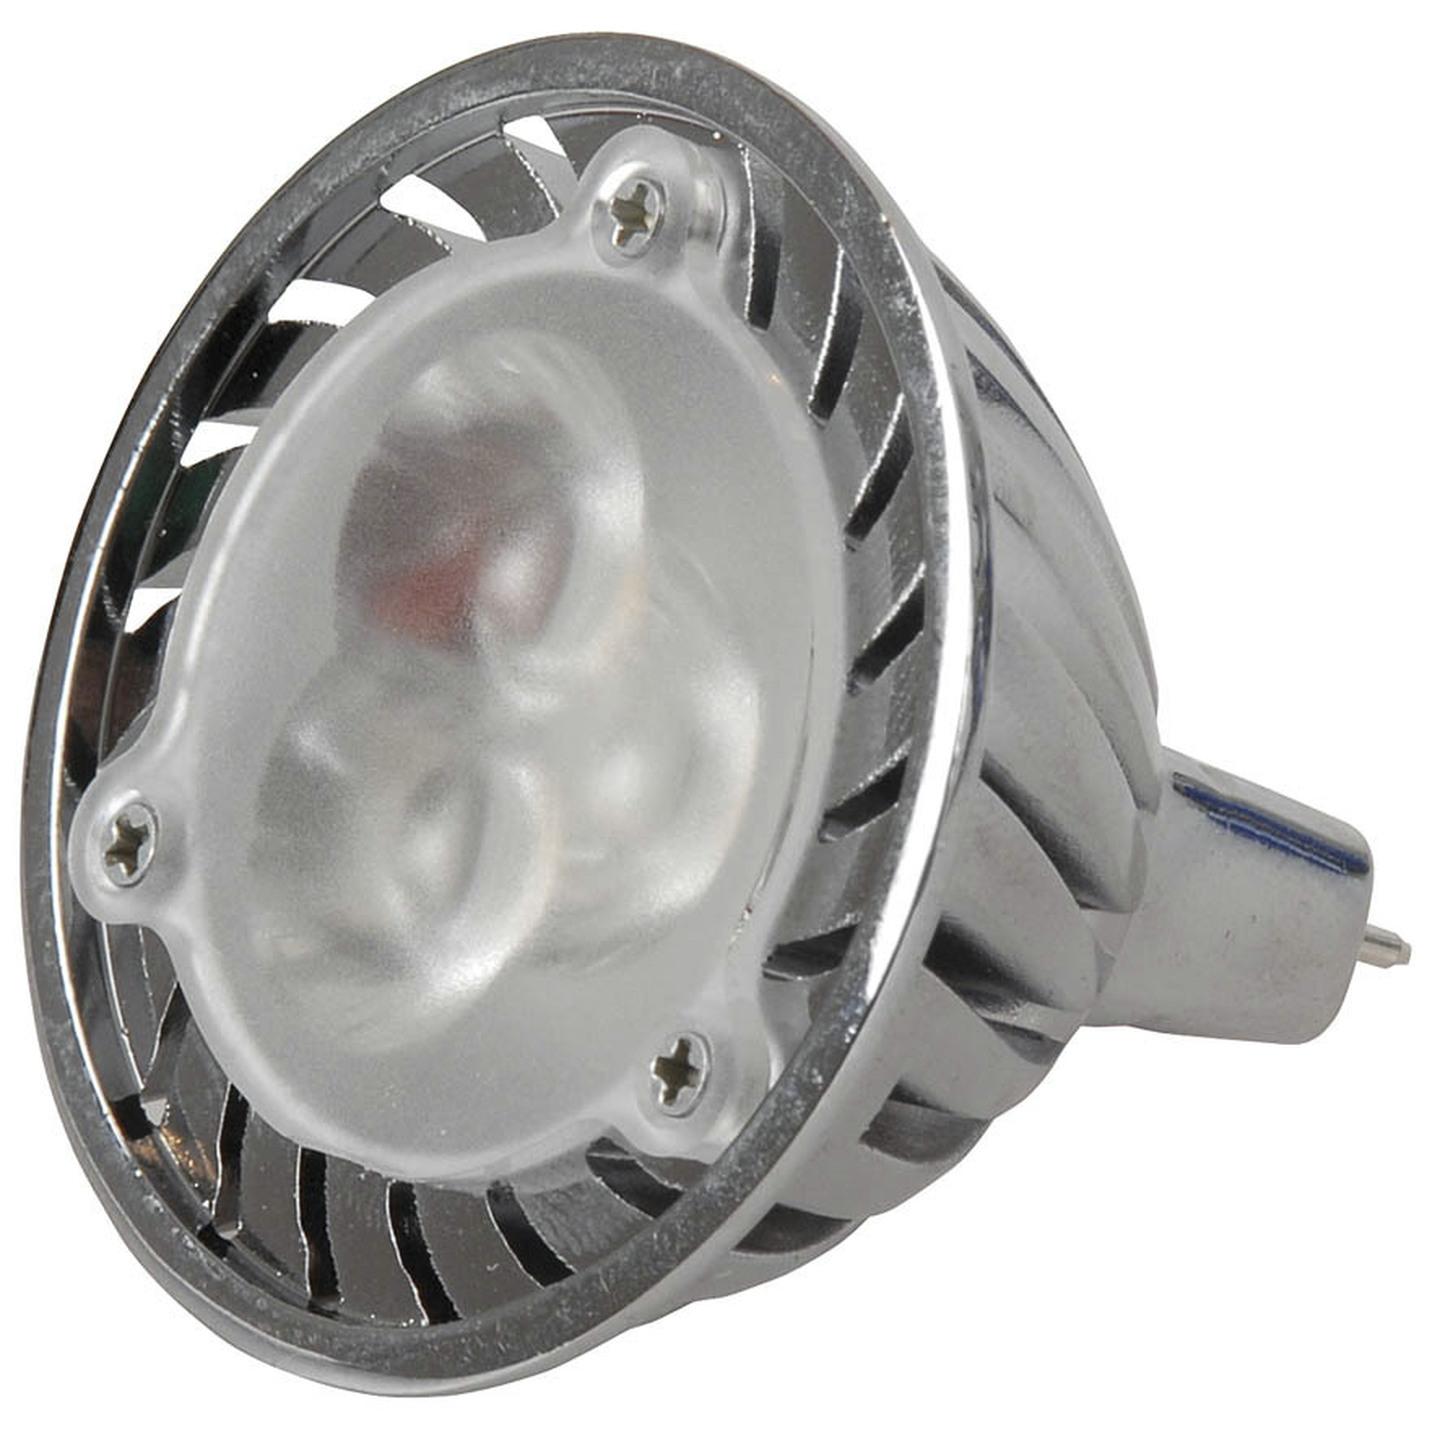 MR16 CREE LED Lamp Warm White